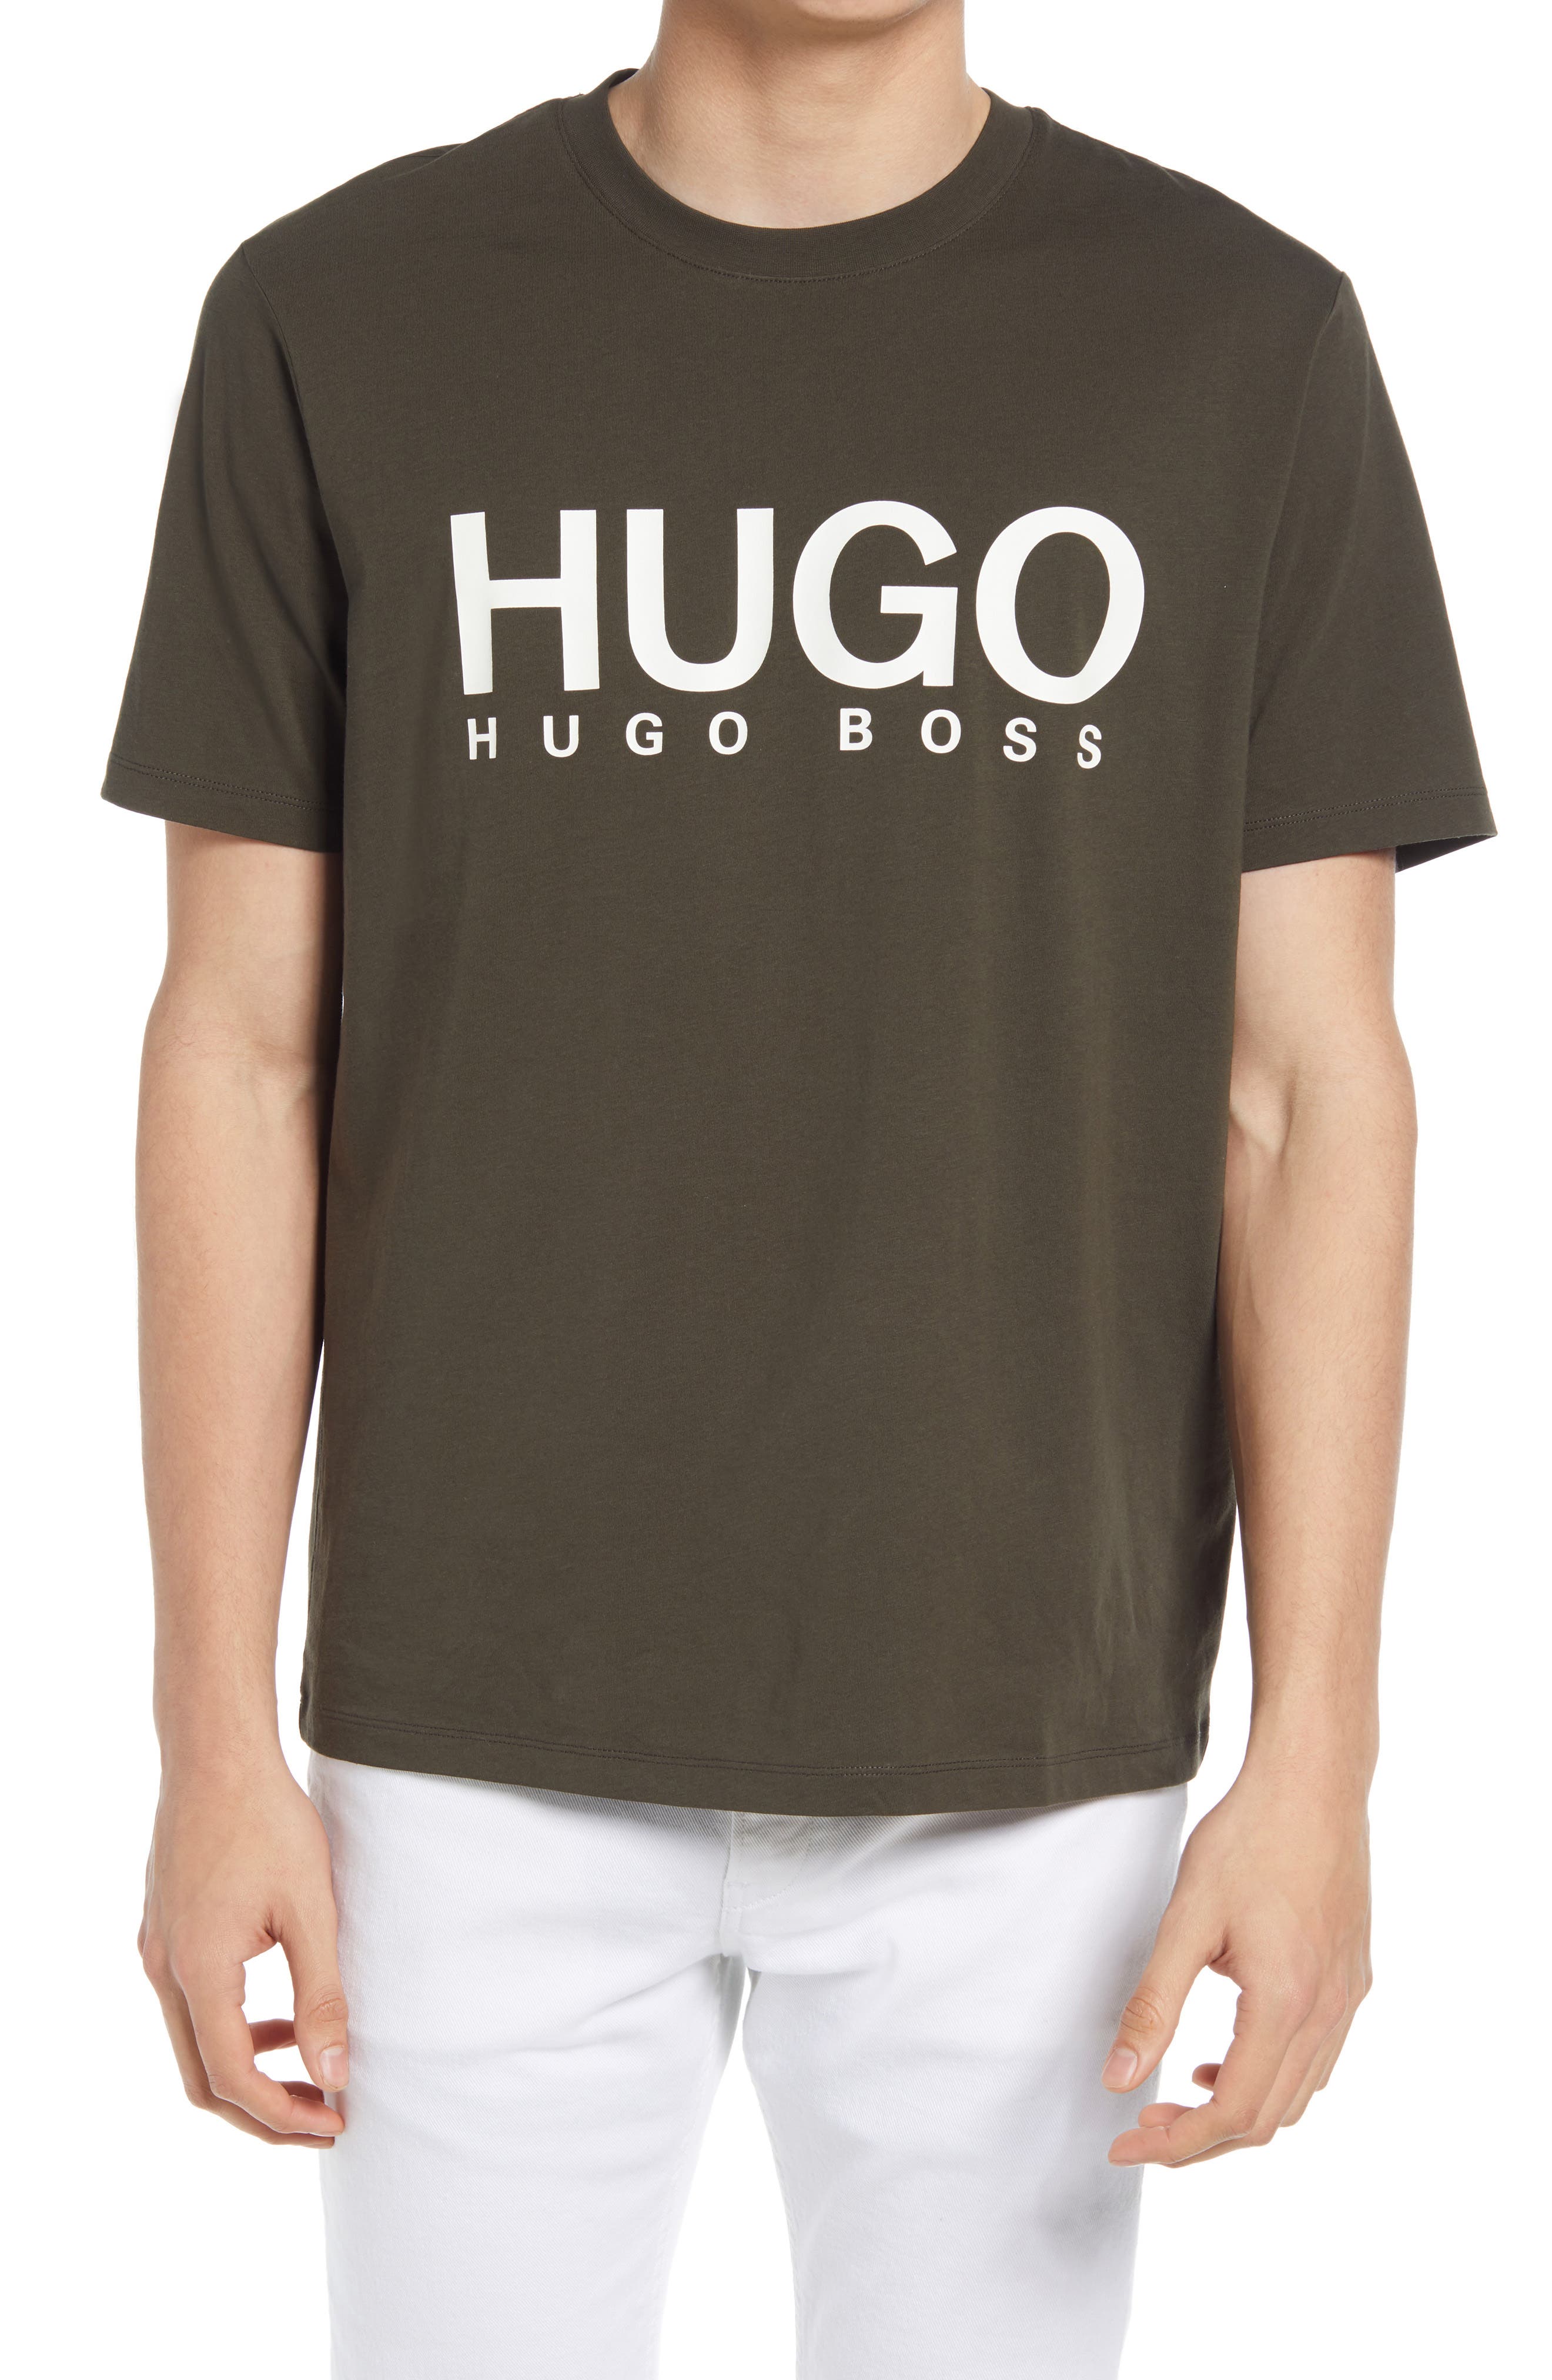 hugo boss shirts nordstrom